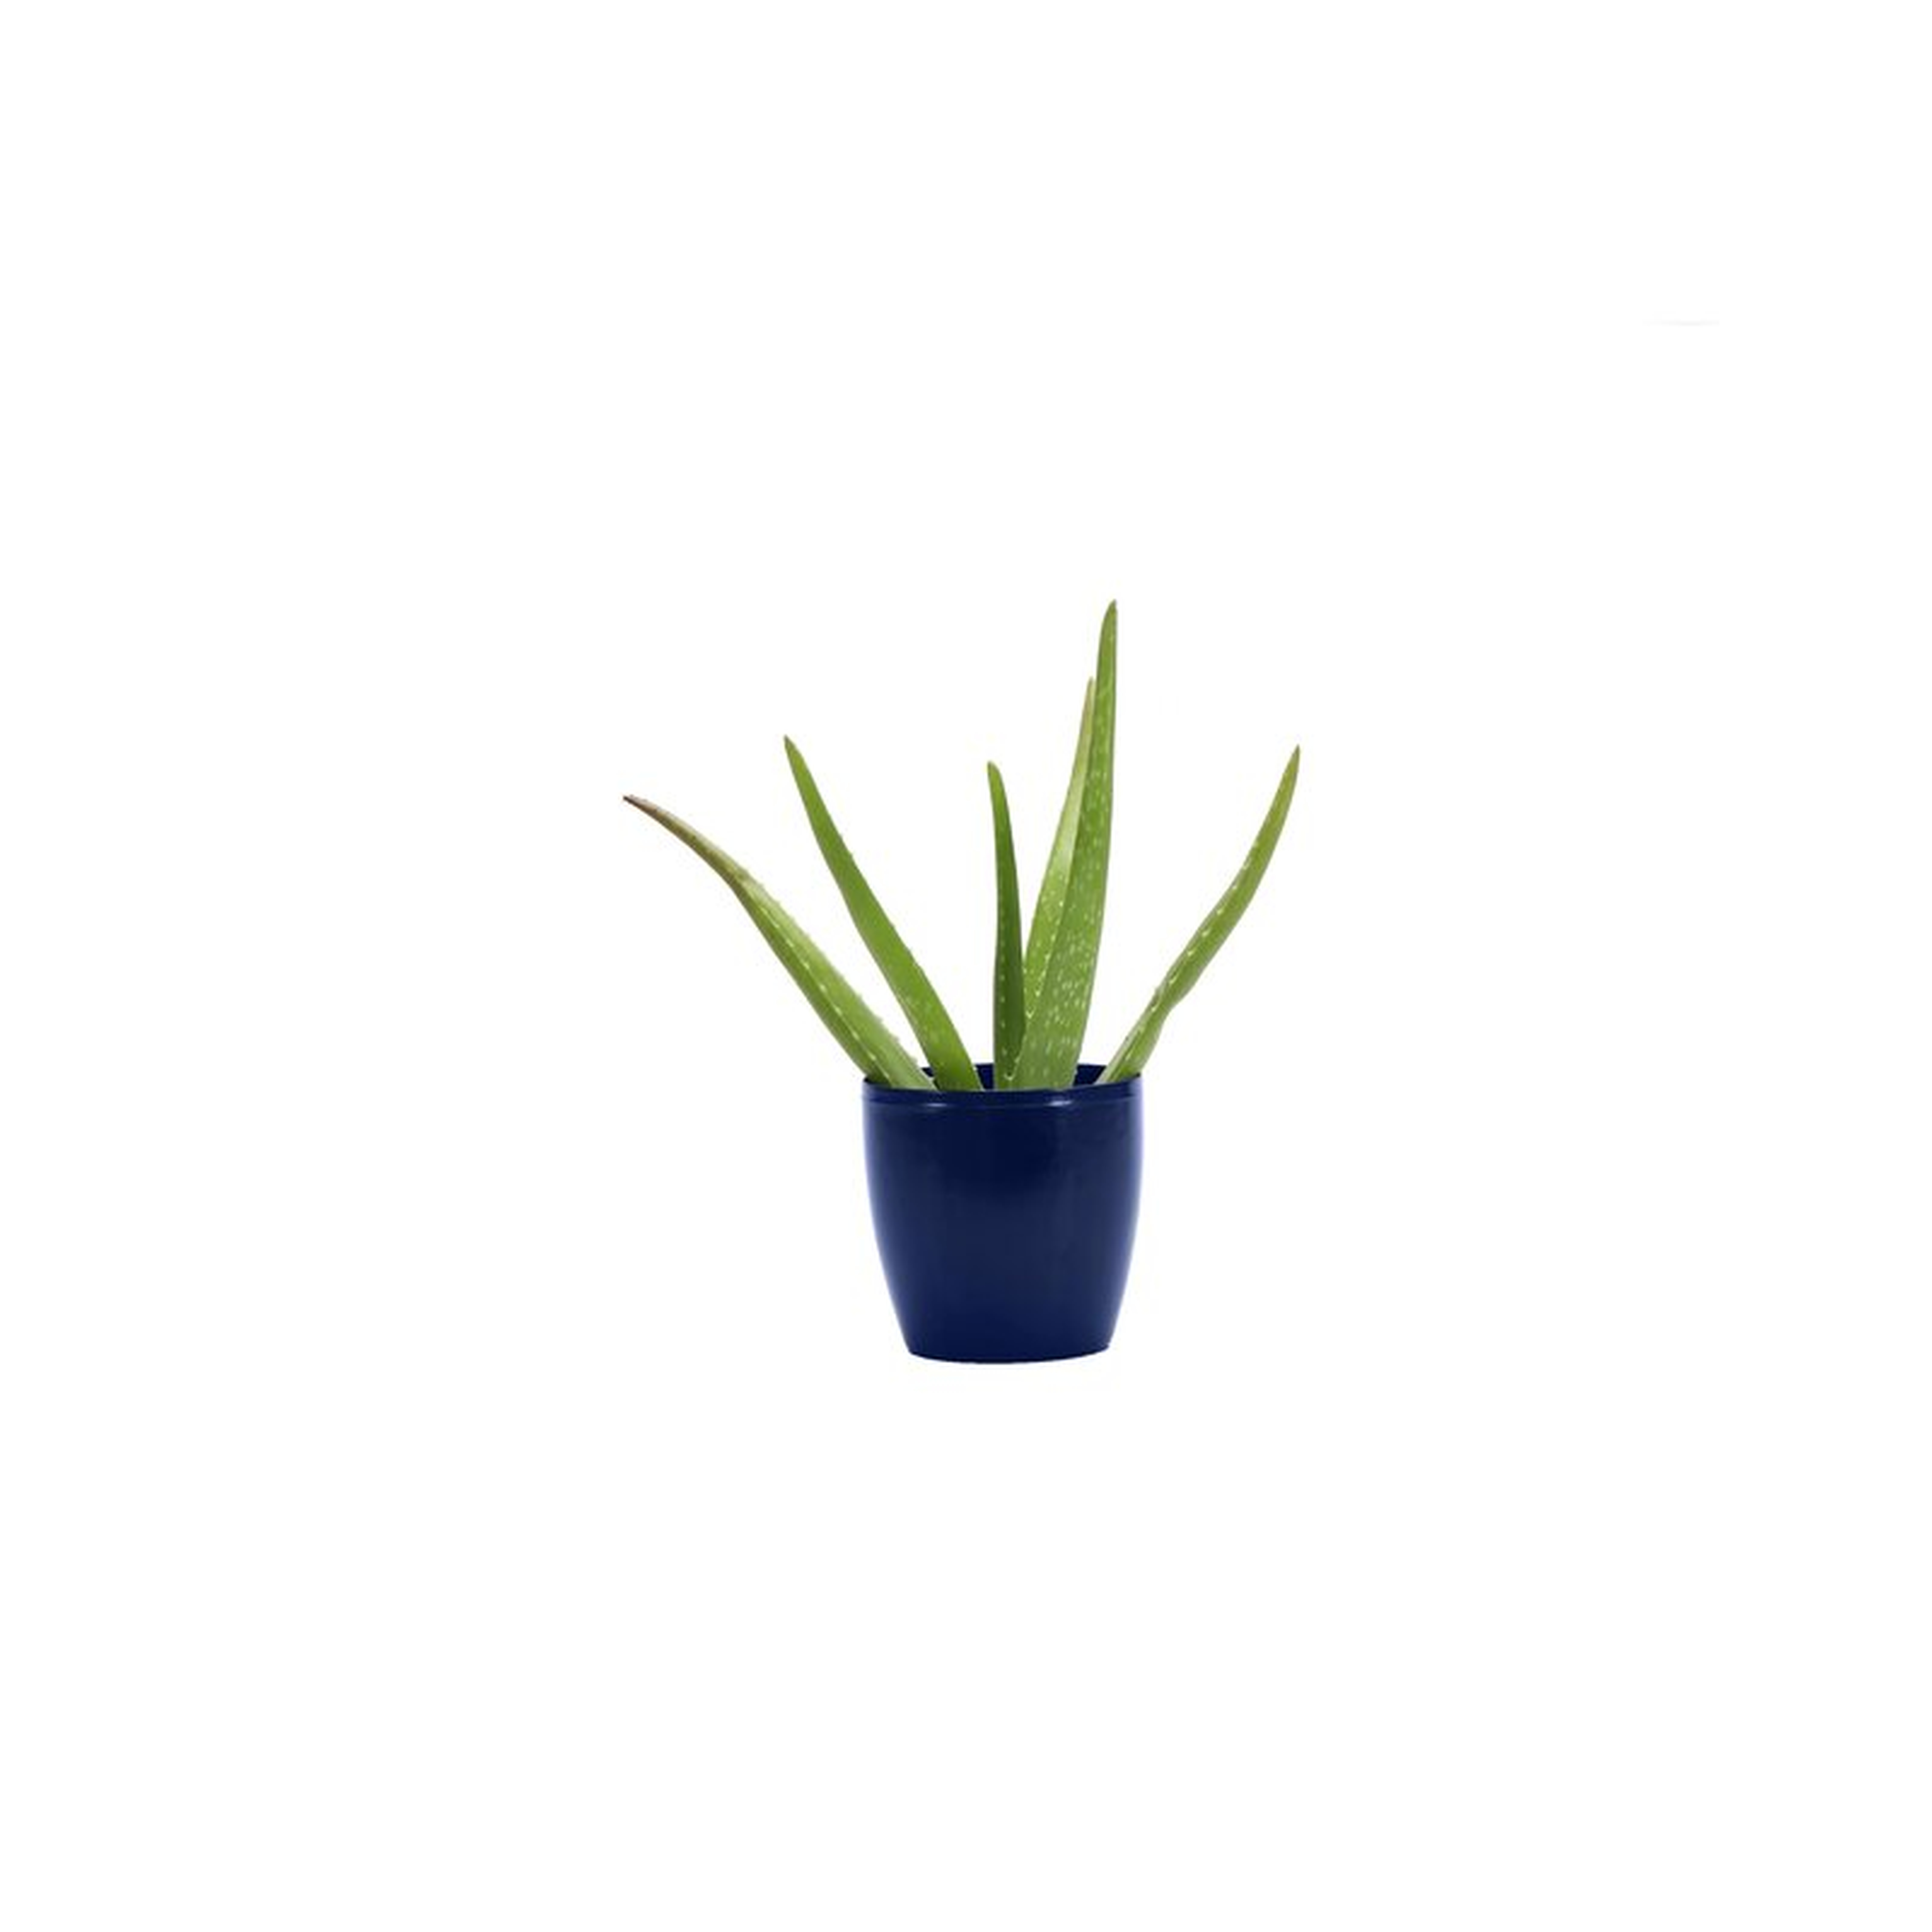 Thorsen's Greenhouse 6" Live Aloe Plant in Pot Base Color: Iris - Perigold